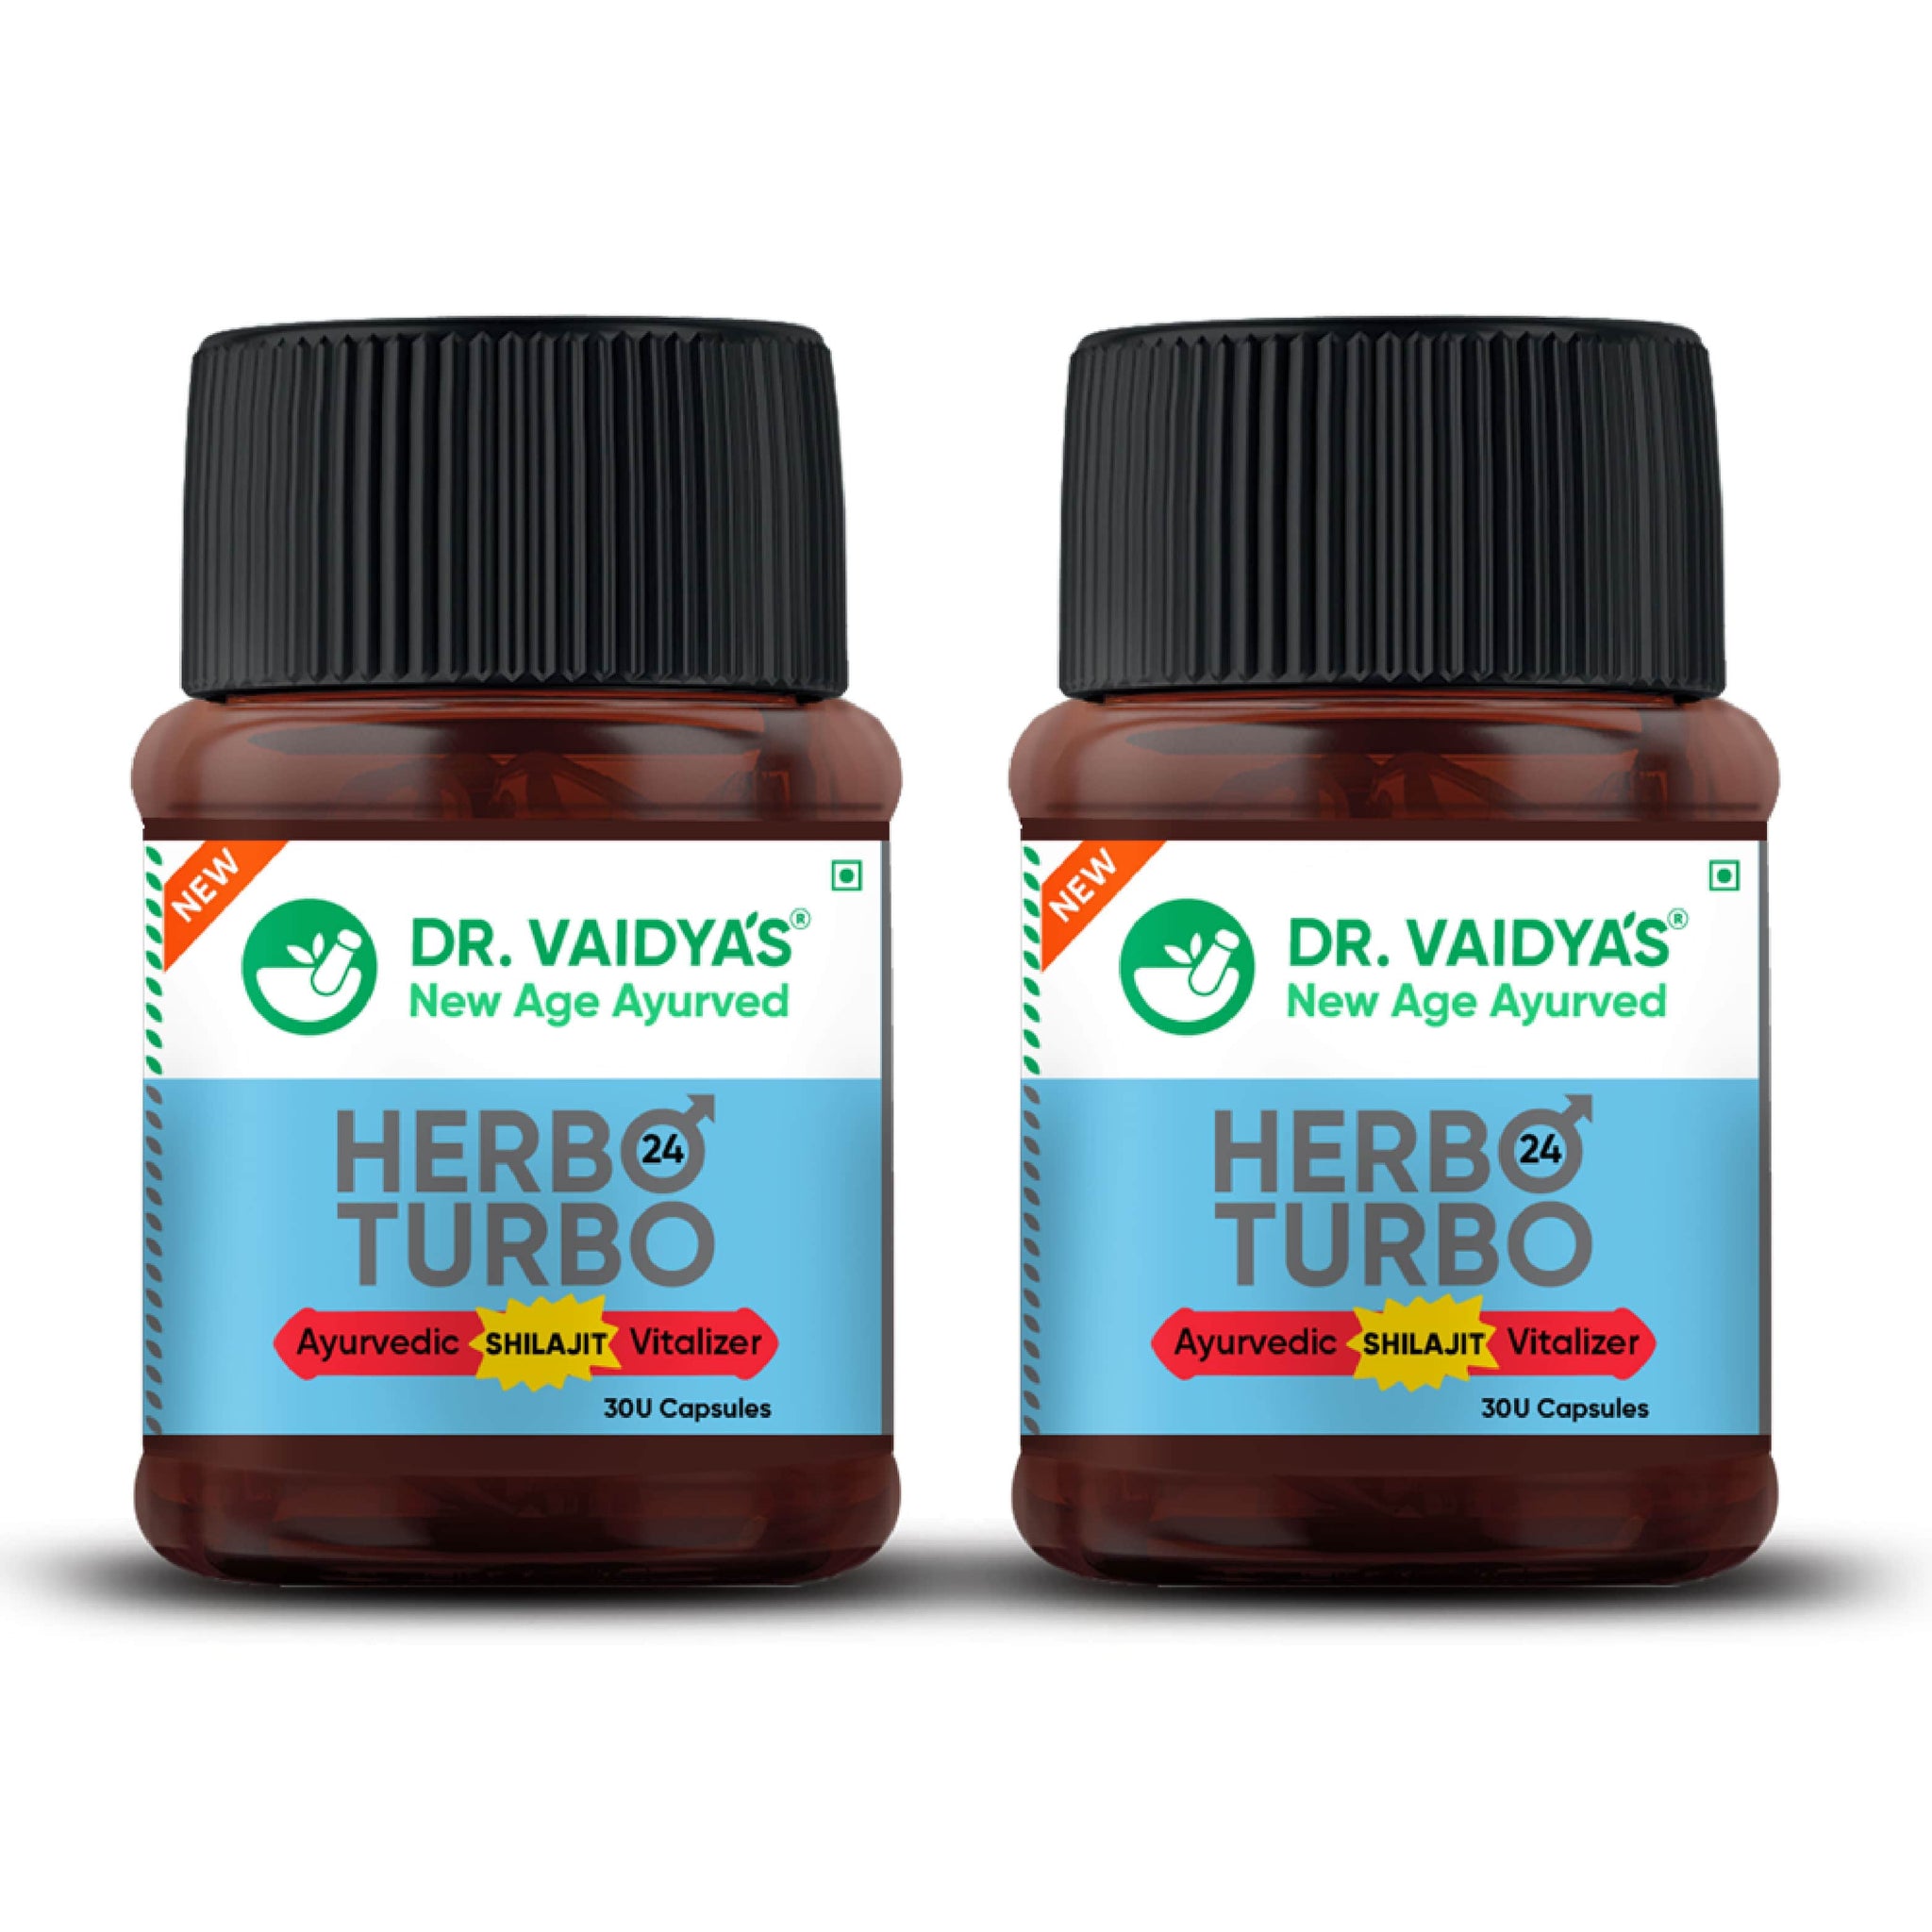 Dr. Vaidya's Herbo24Turbo